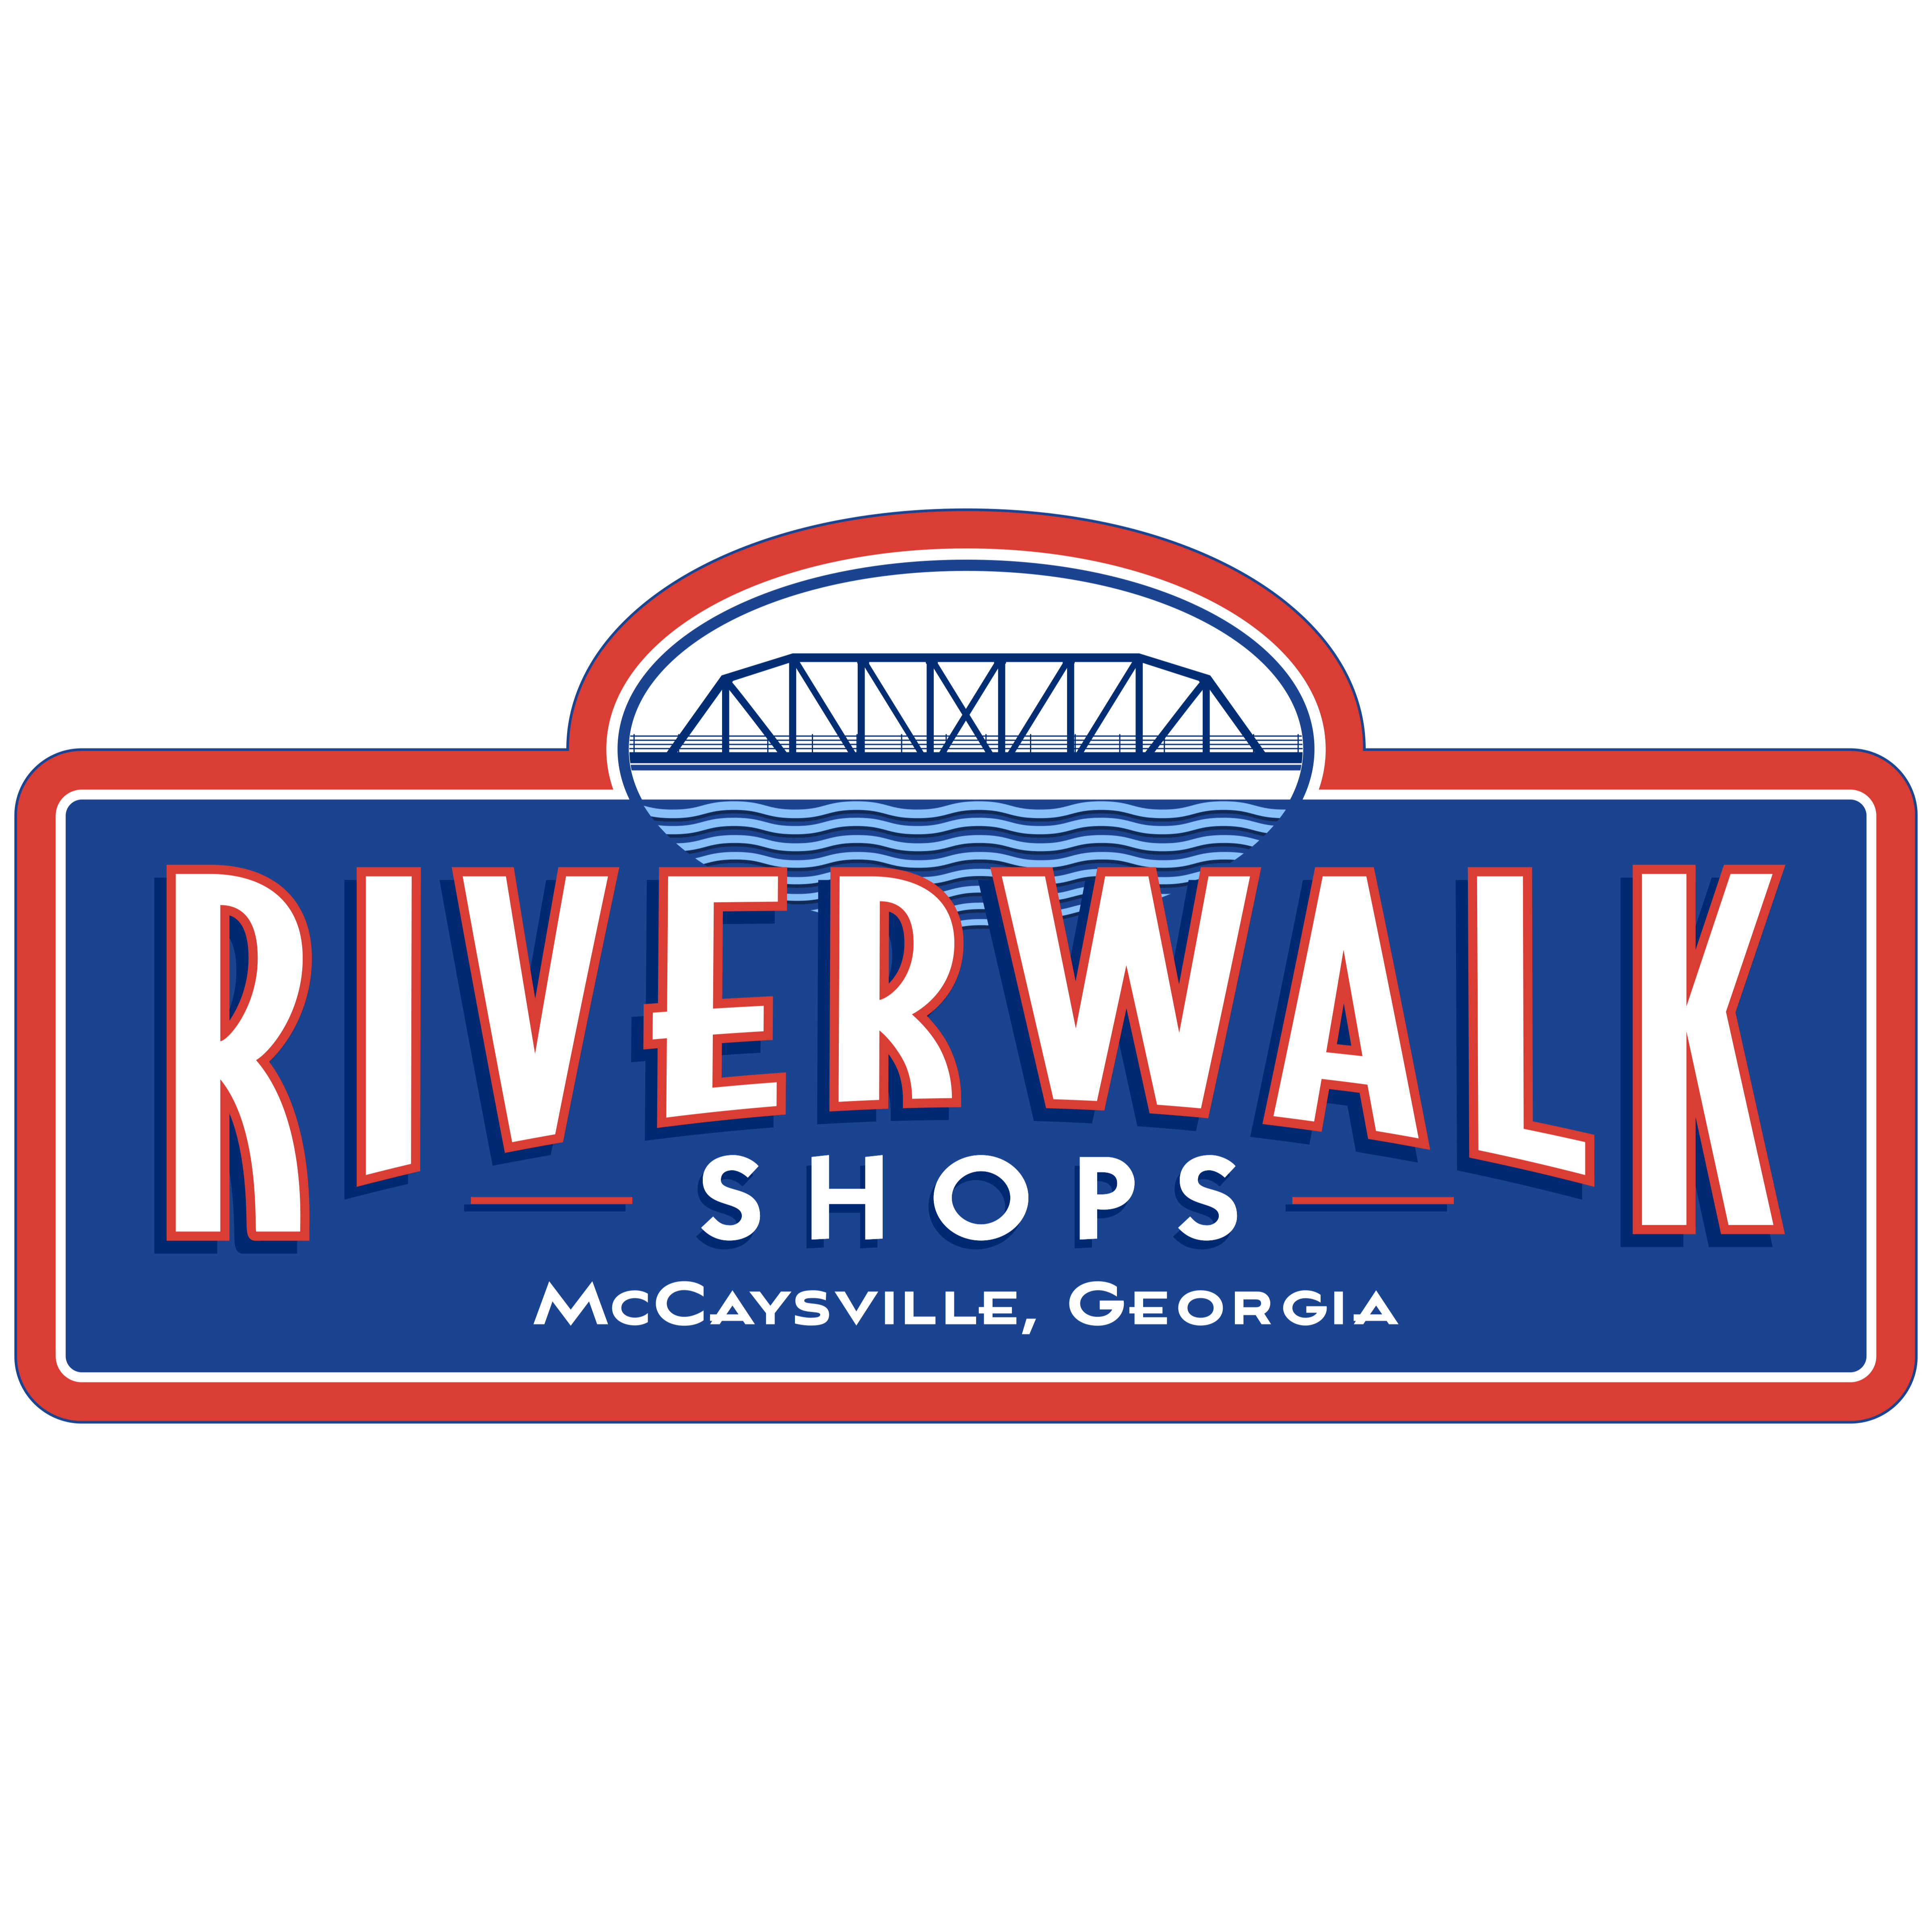 Riverwalk Shops - McCaysville, GA 30555 - (706)964-8800 | ShowMeLocal.com